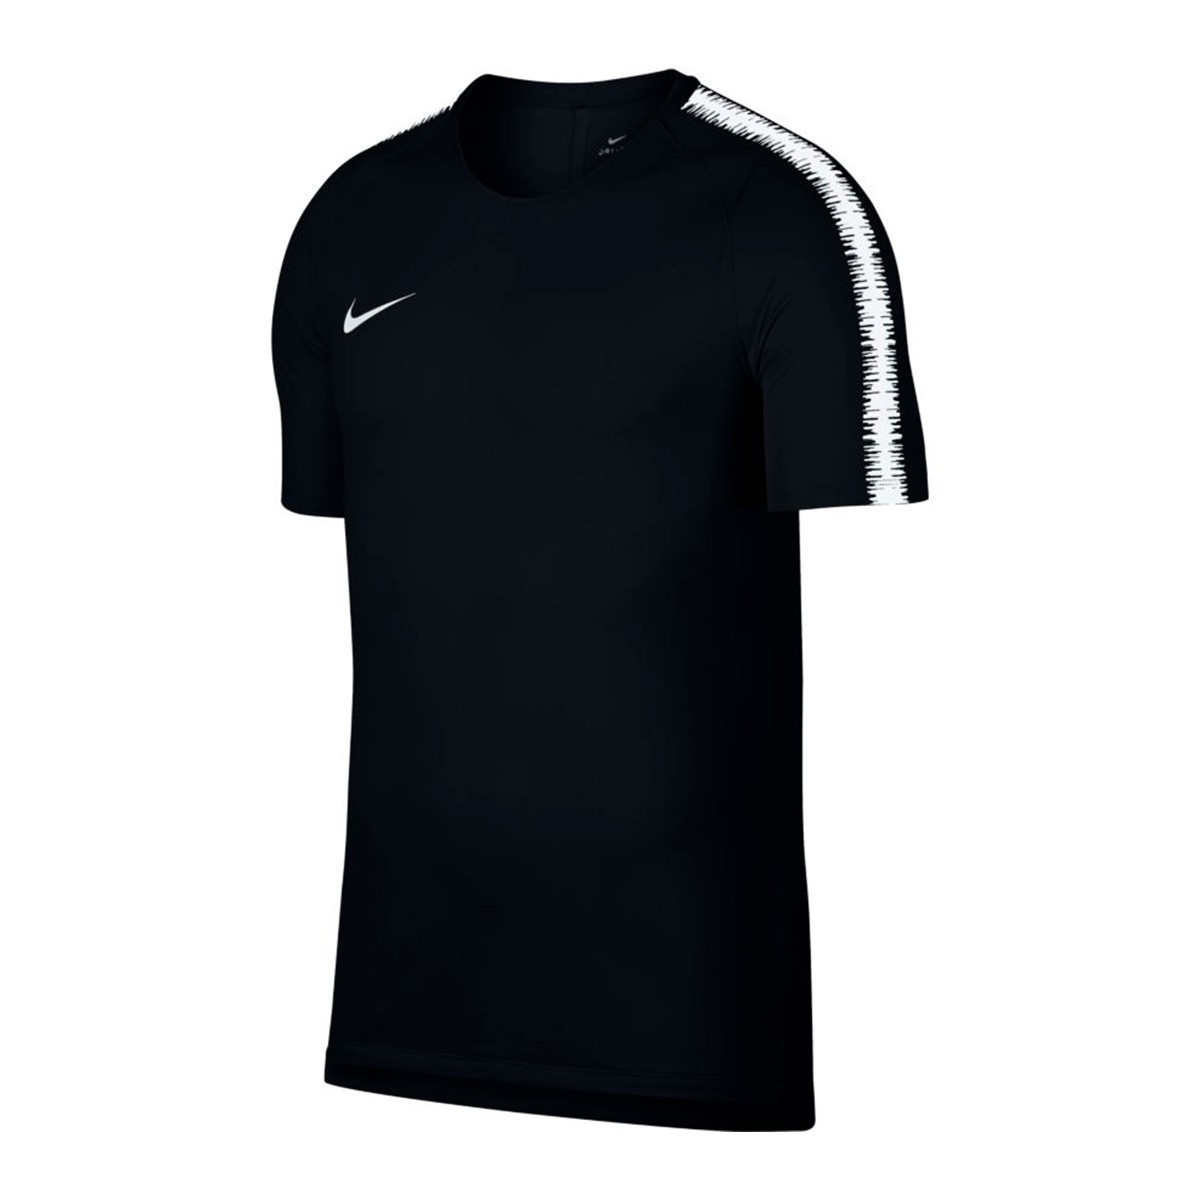 Camiseta Nike Breathe Squad Black-White - Tienda de fútbol Fútbol Emotion